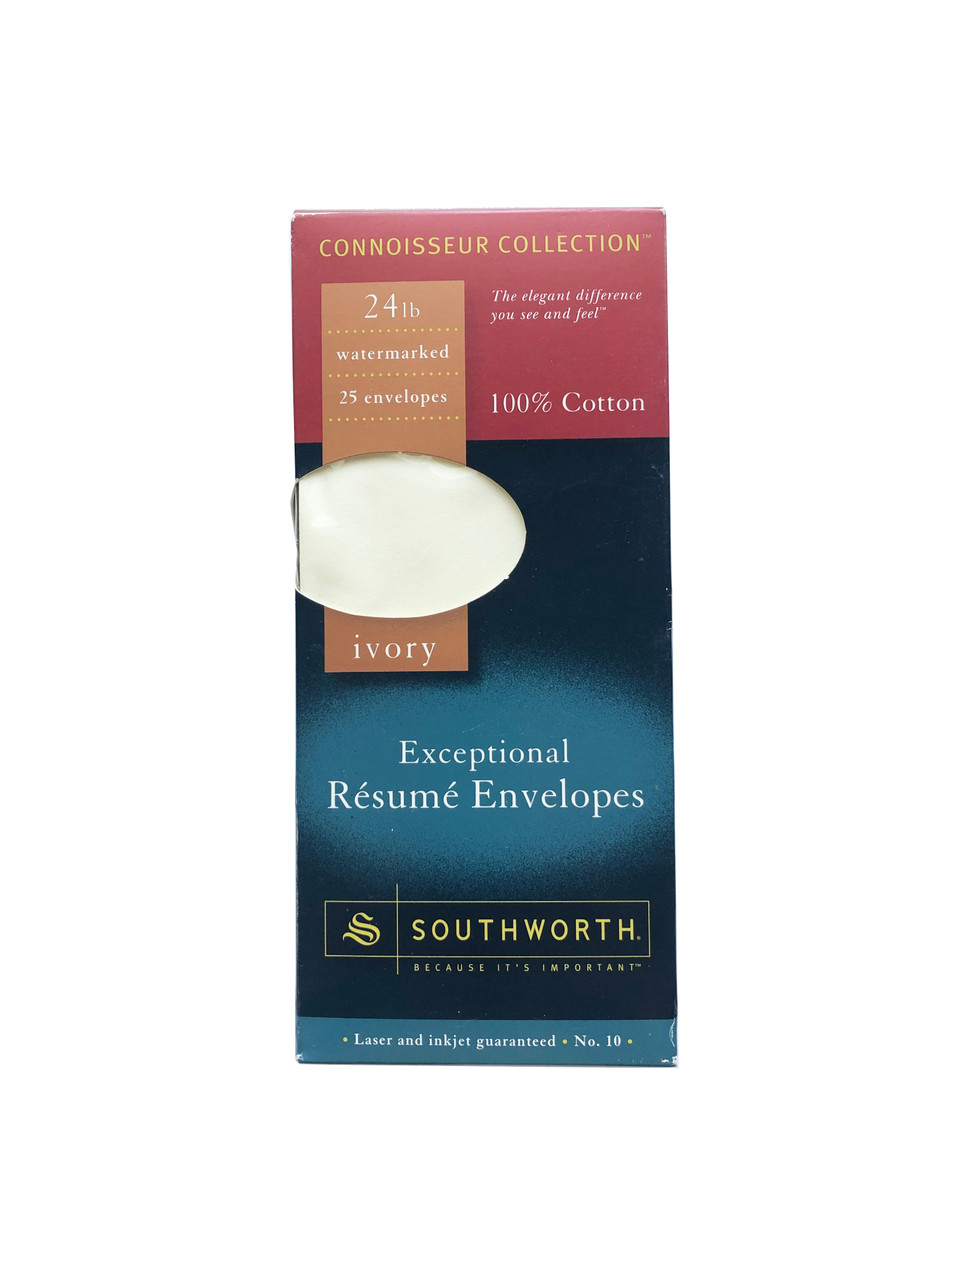 Southworth Connoisseur Collection 100% Cotton Ivory Exceptional Resume  Paper PO